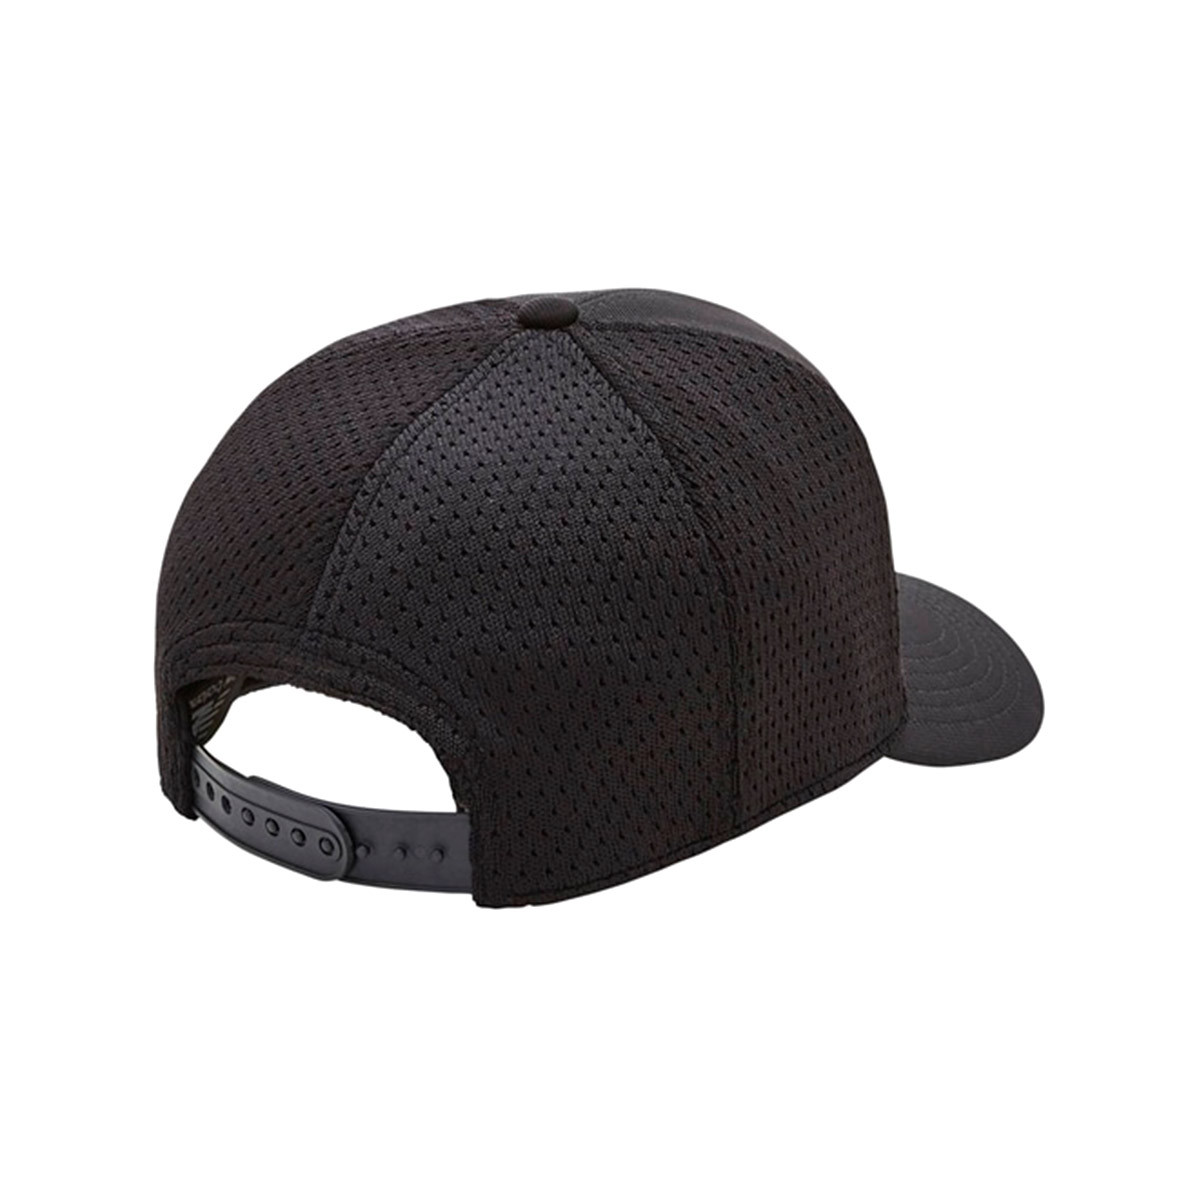 liverpool hat new balance black